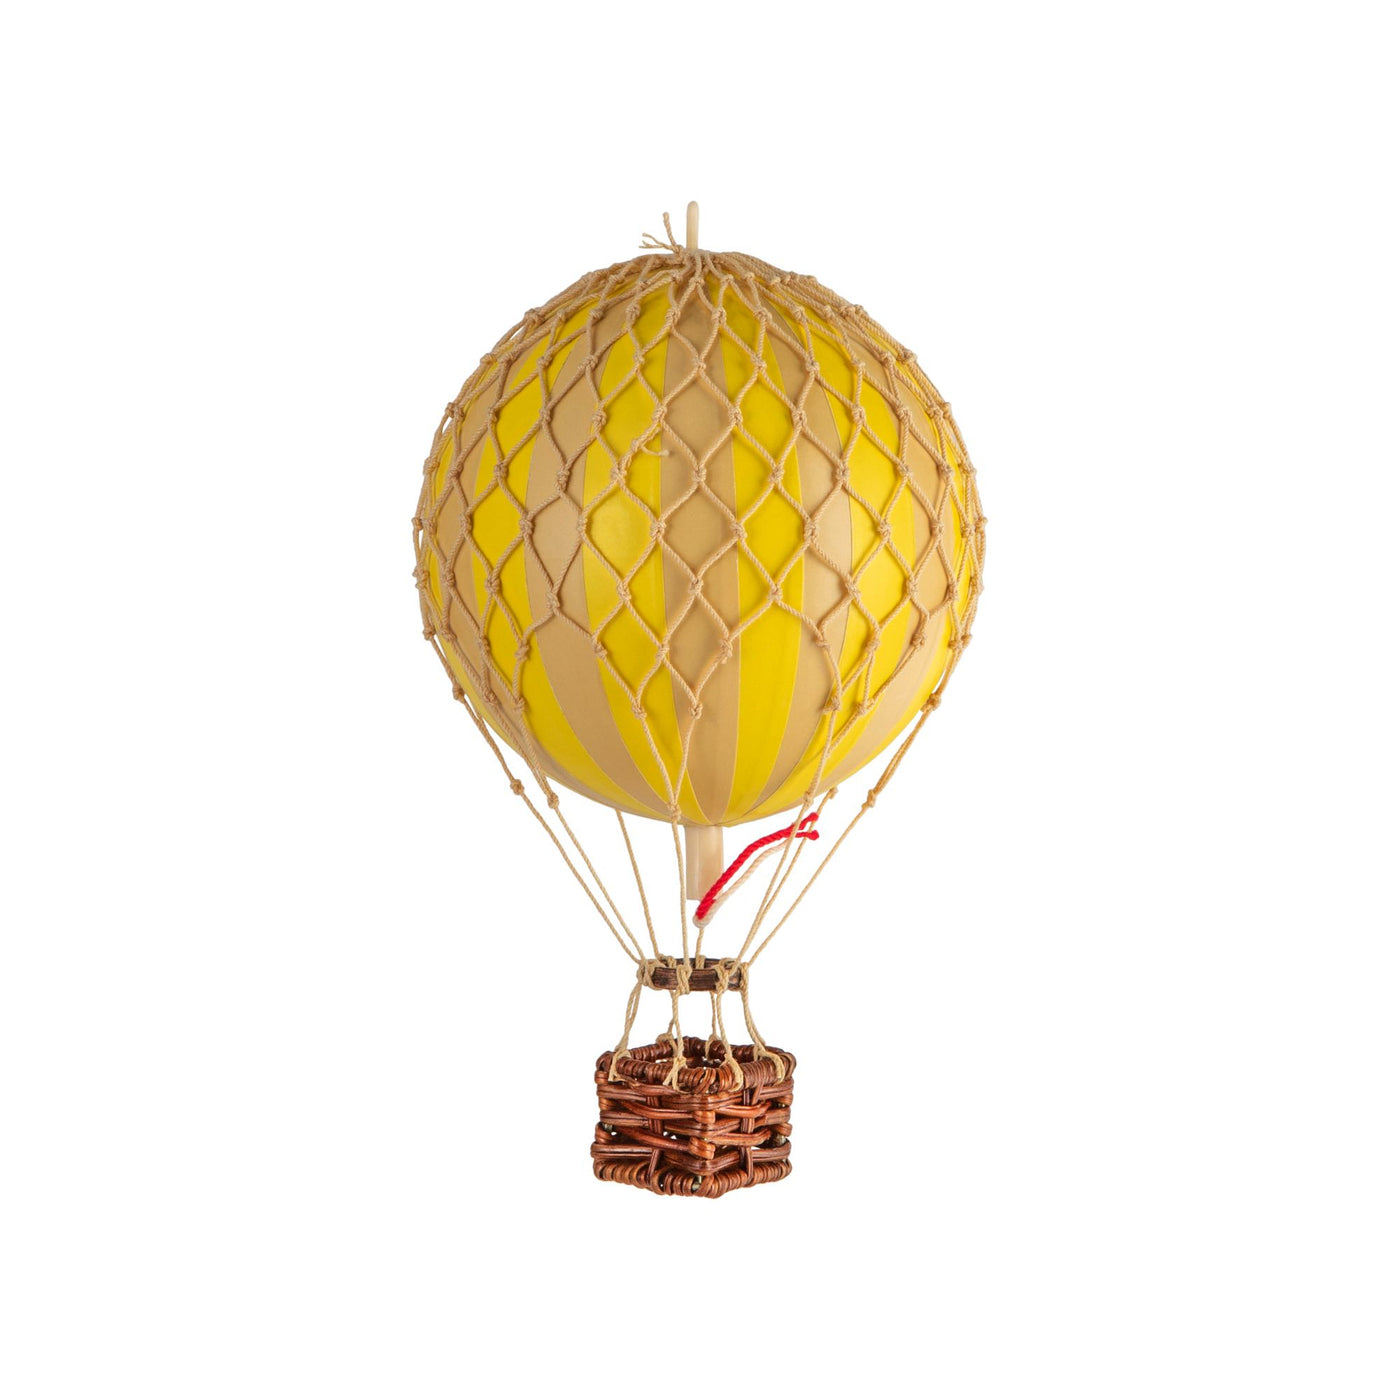 Luftballon True Yellow, 8,5 cm. Floating The Skies, Authentic Models